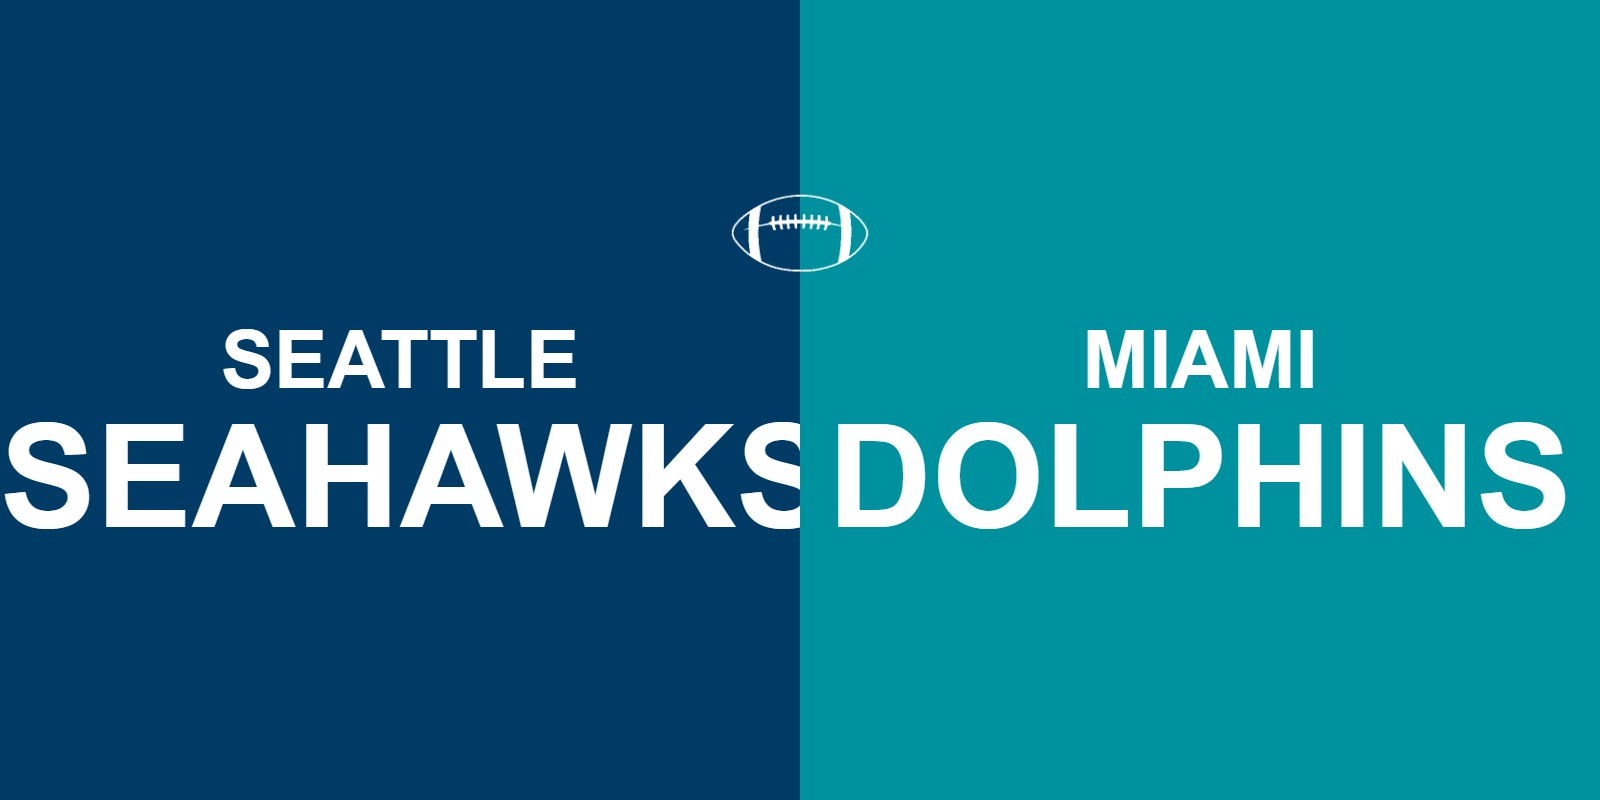 Seahawks vs Dolphins